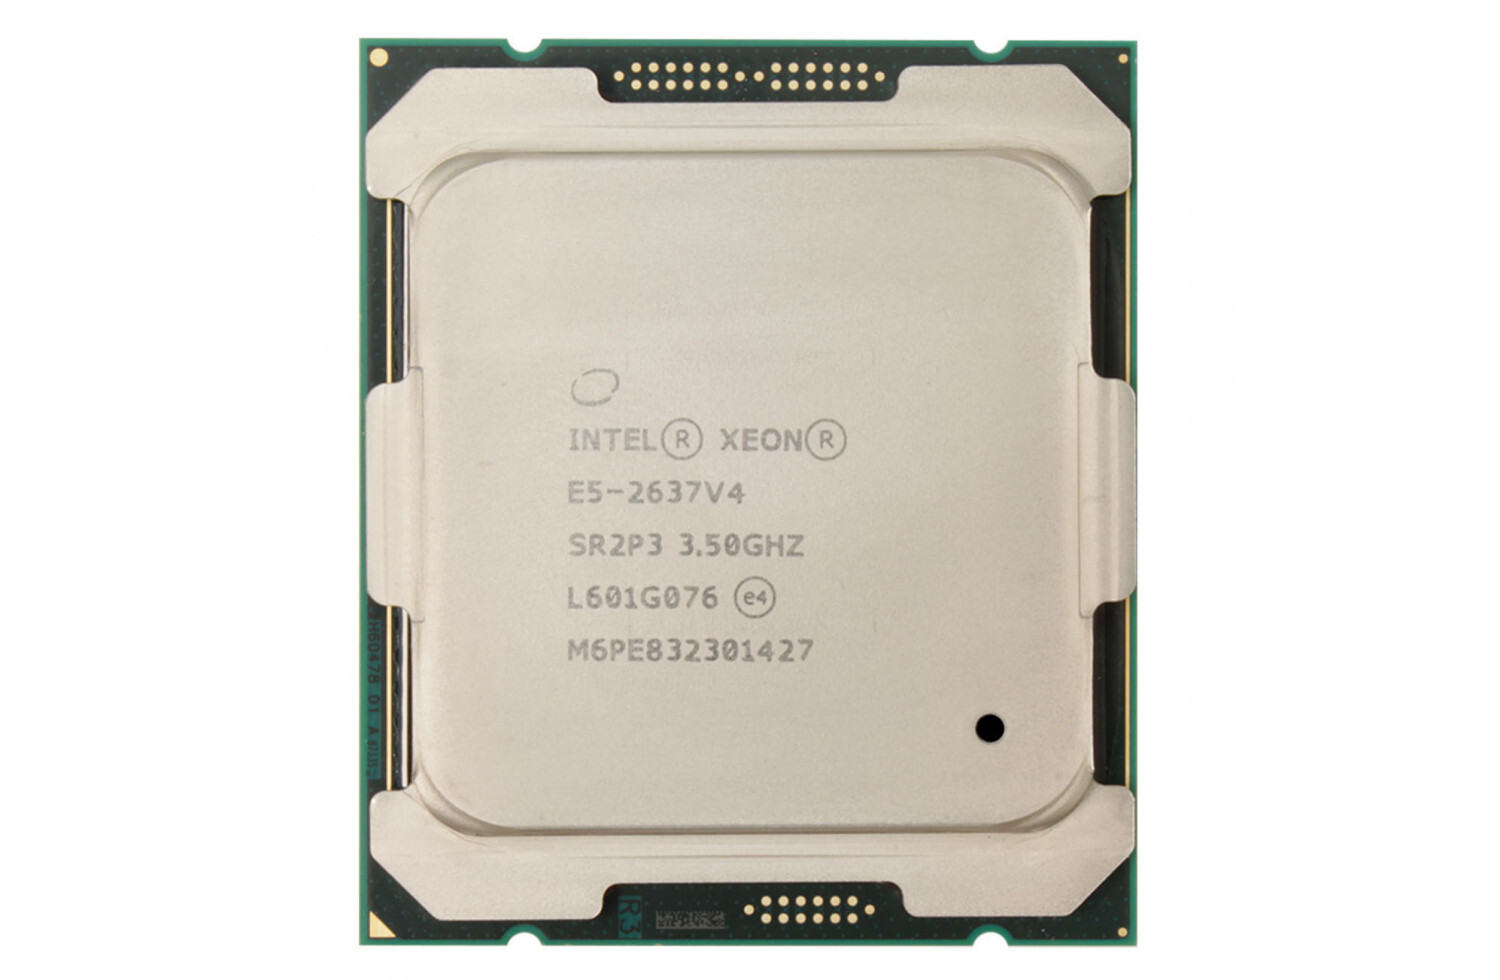 Интел 2650. Процессор Intel Xeon e5-2637v4 Broadwell-Ep. Intel Core i7-7800x lga2066, 6 x 3500 МГЦ. Процессор Xeon e5 2680 v4. Intel Xeon w-2295.